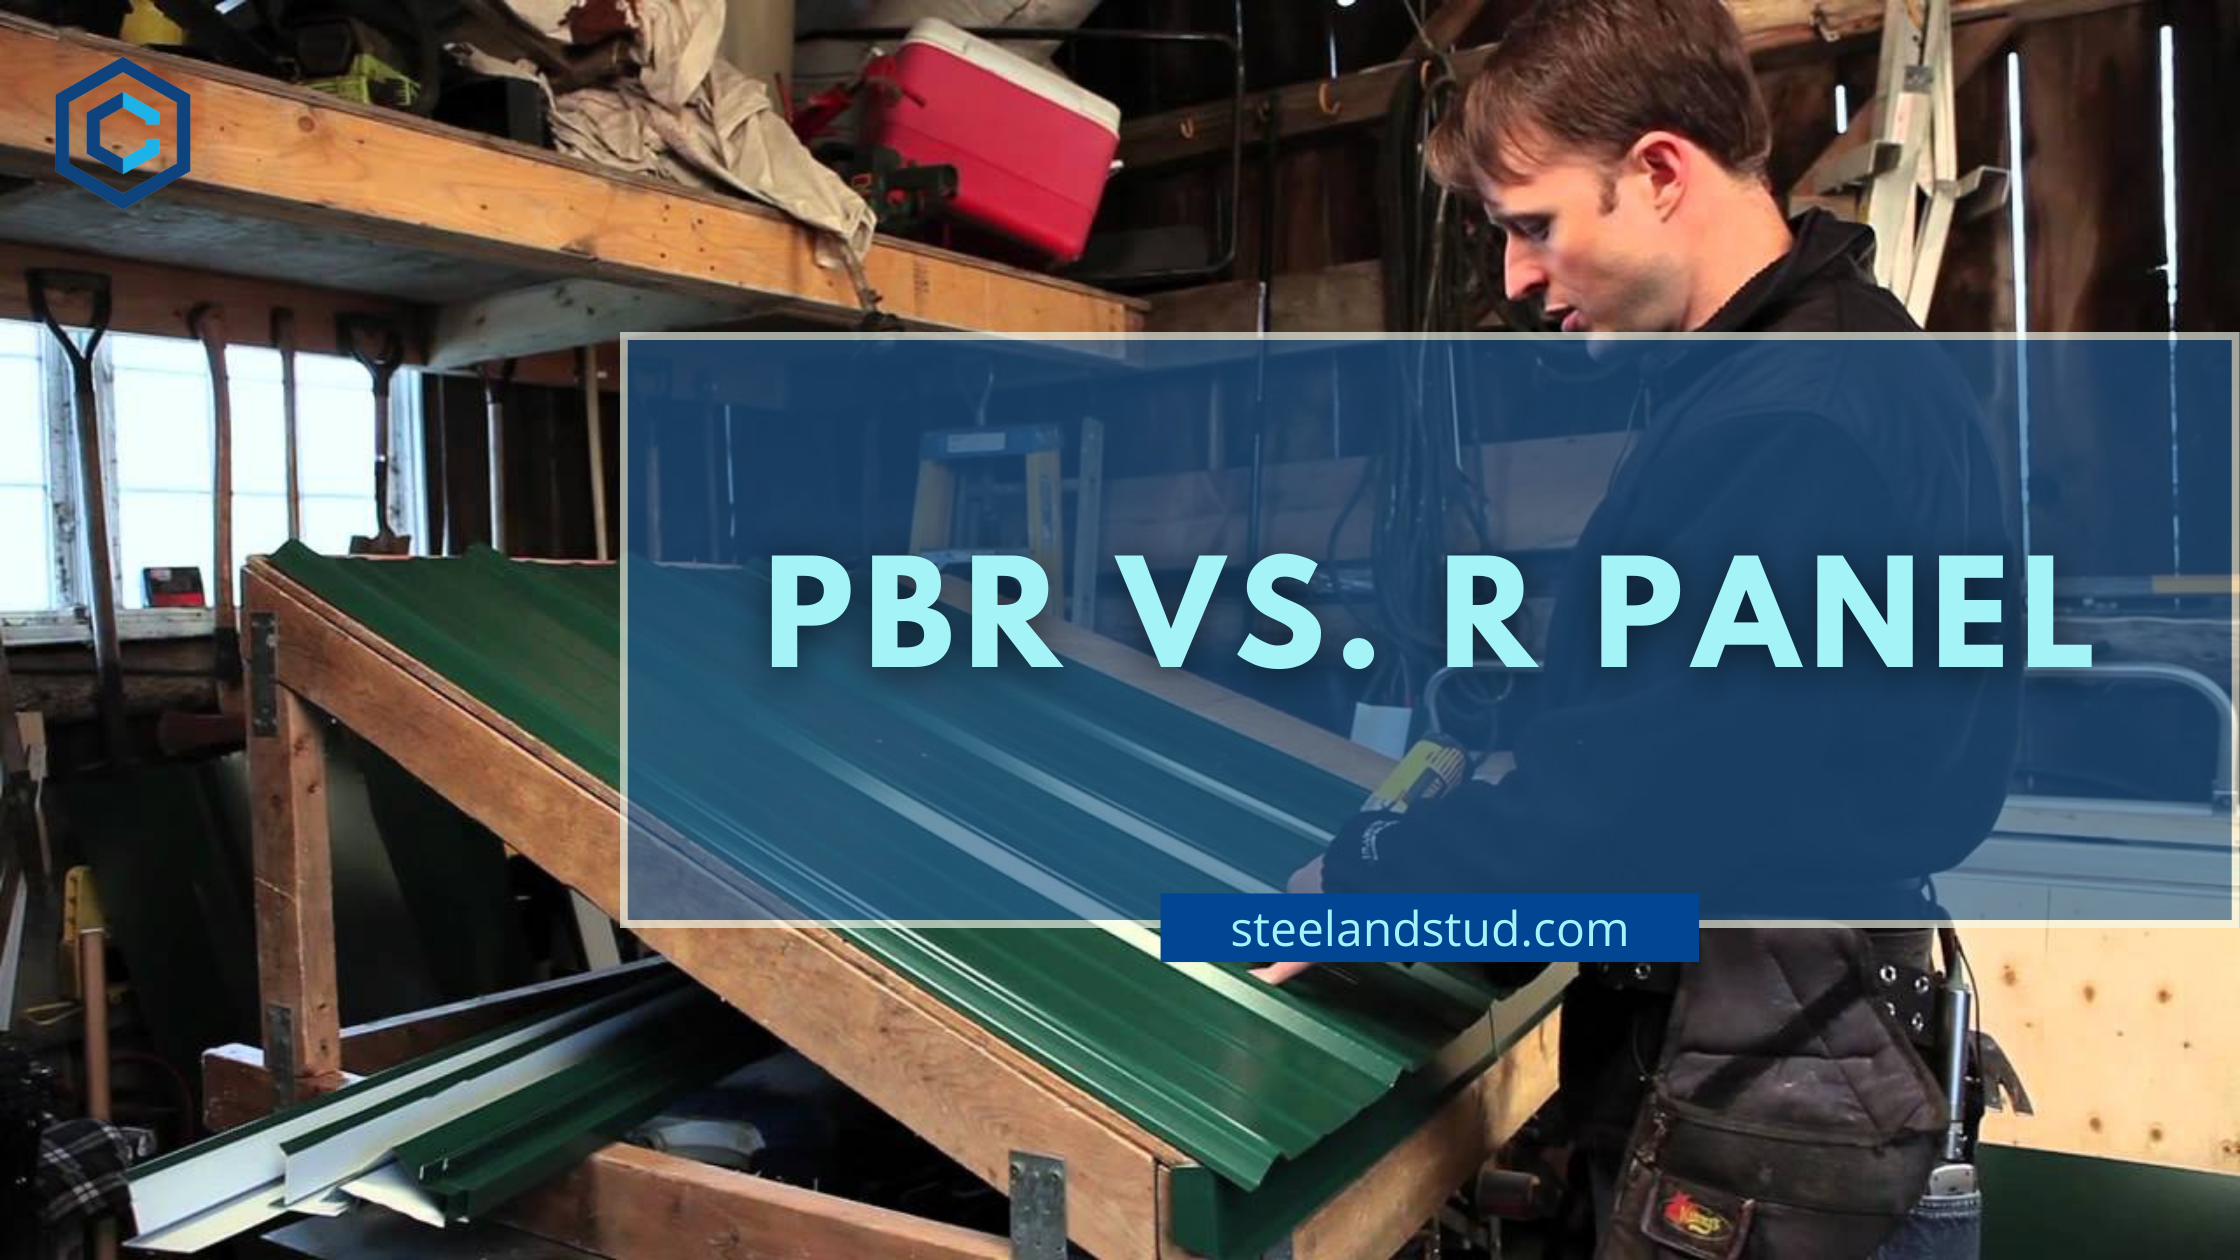 PBR vs. r panel